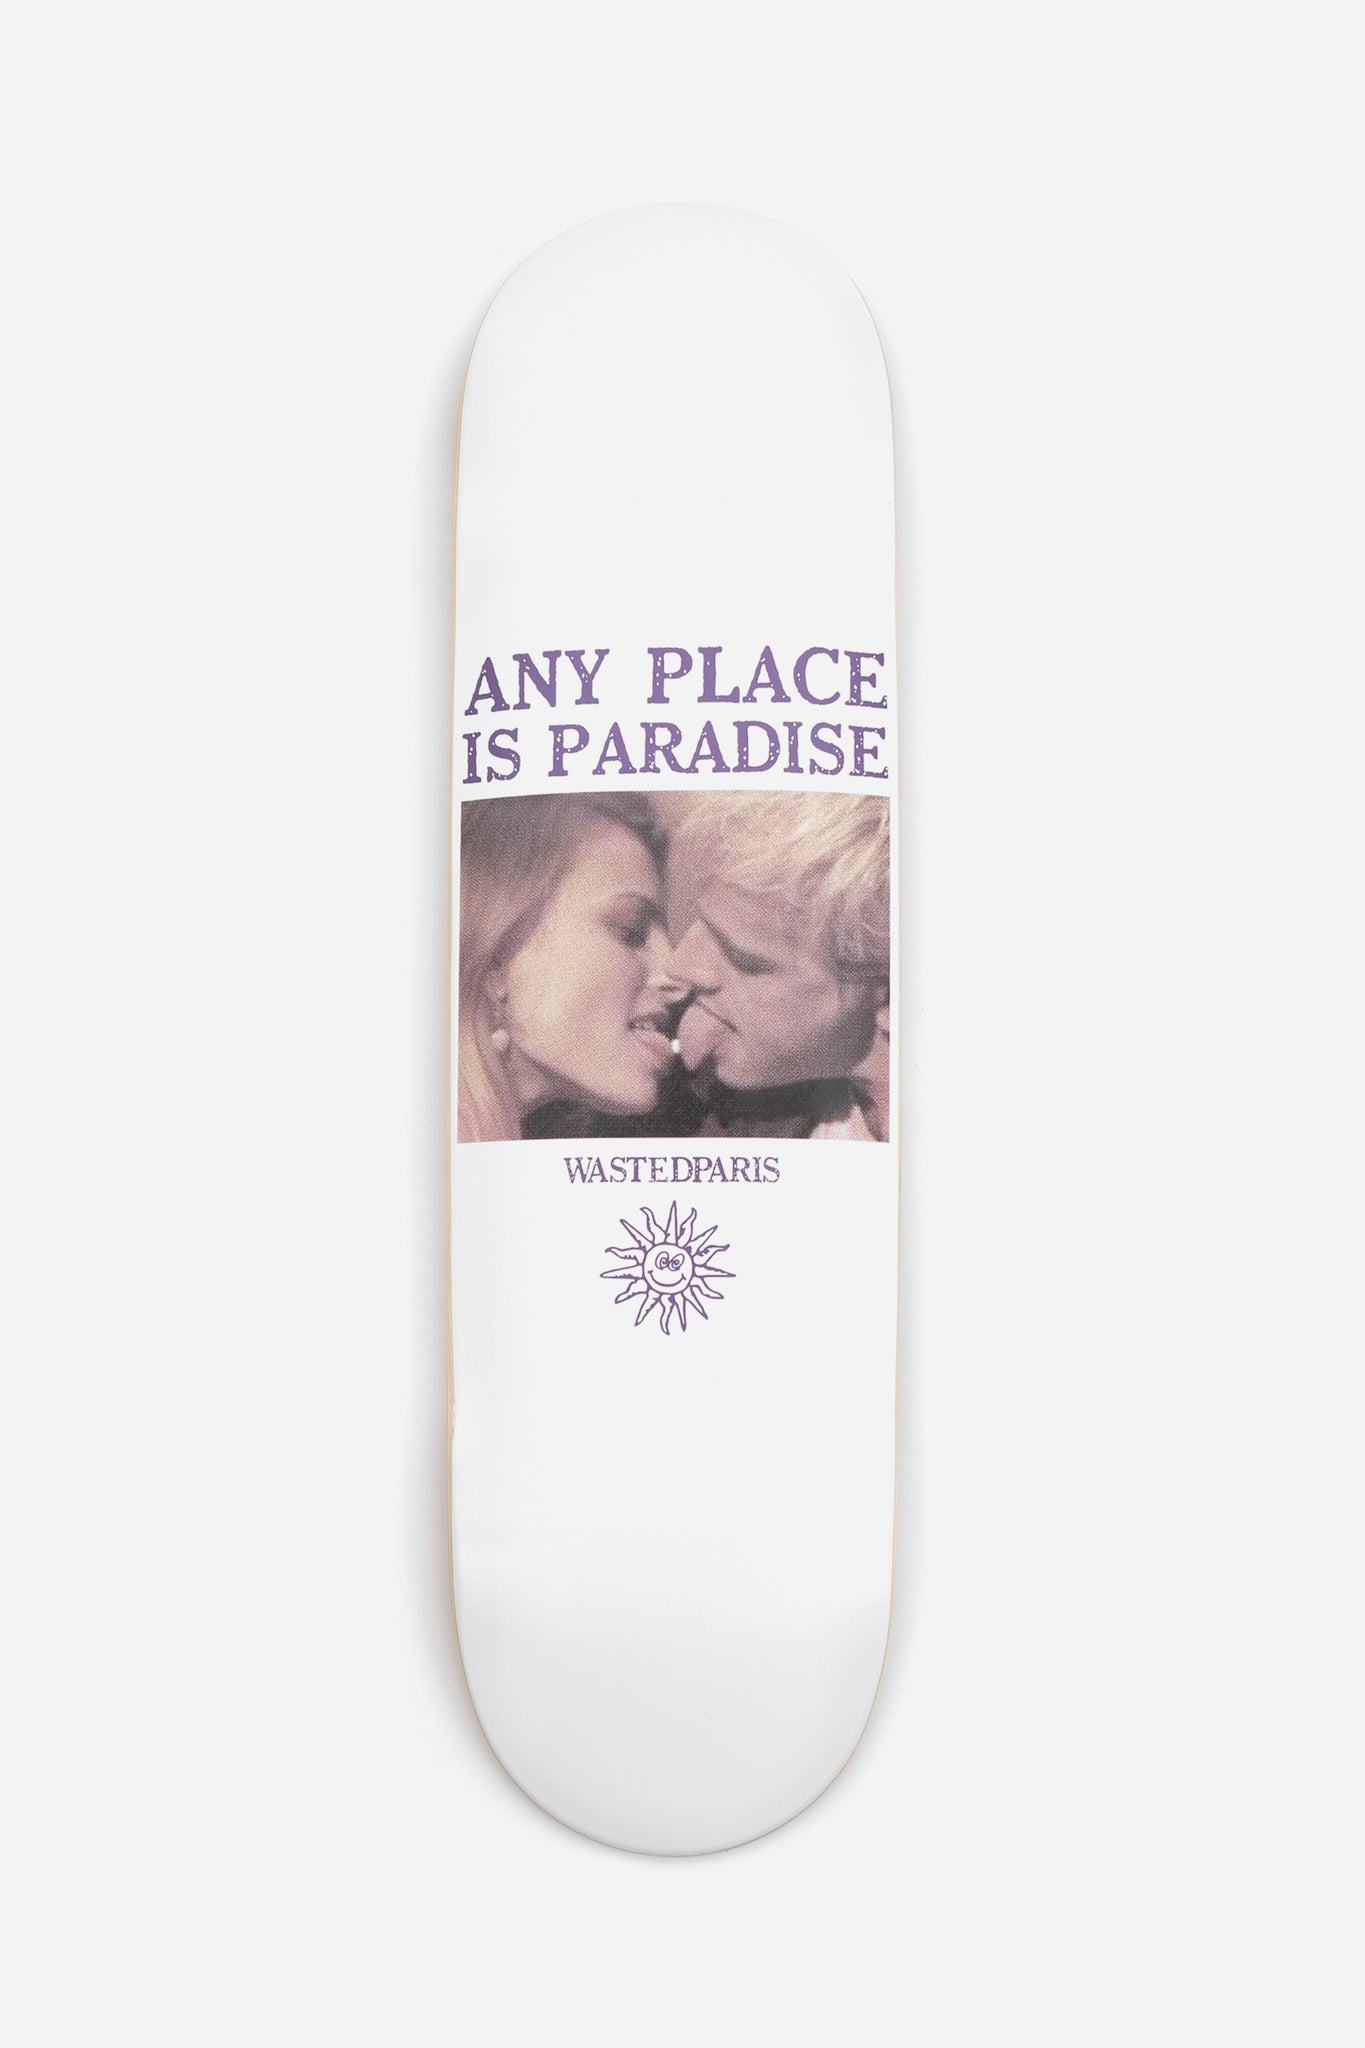 Board Paradise